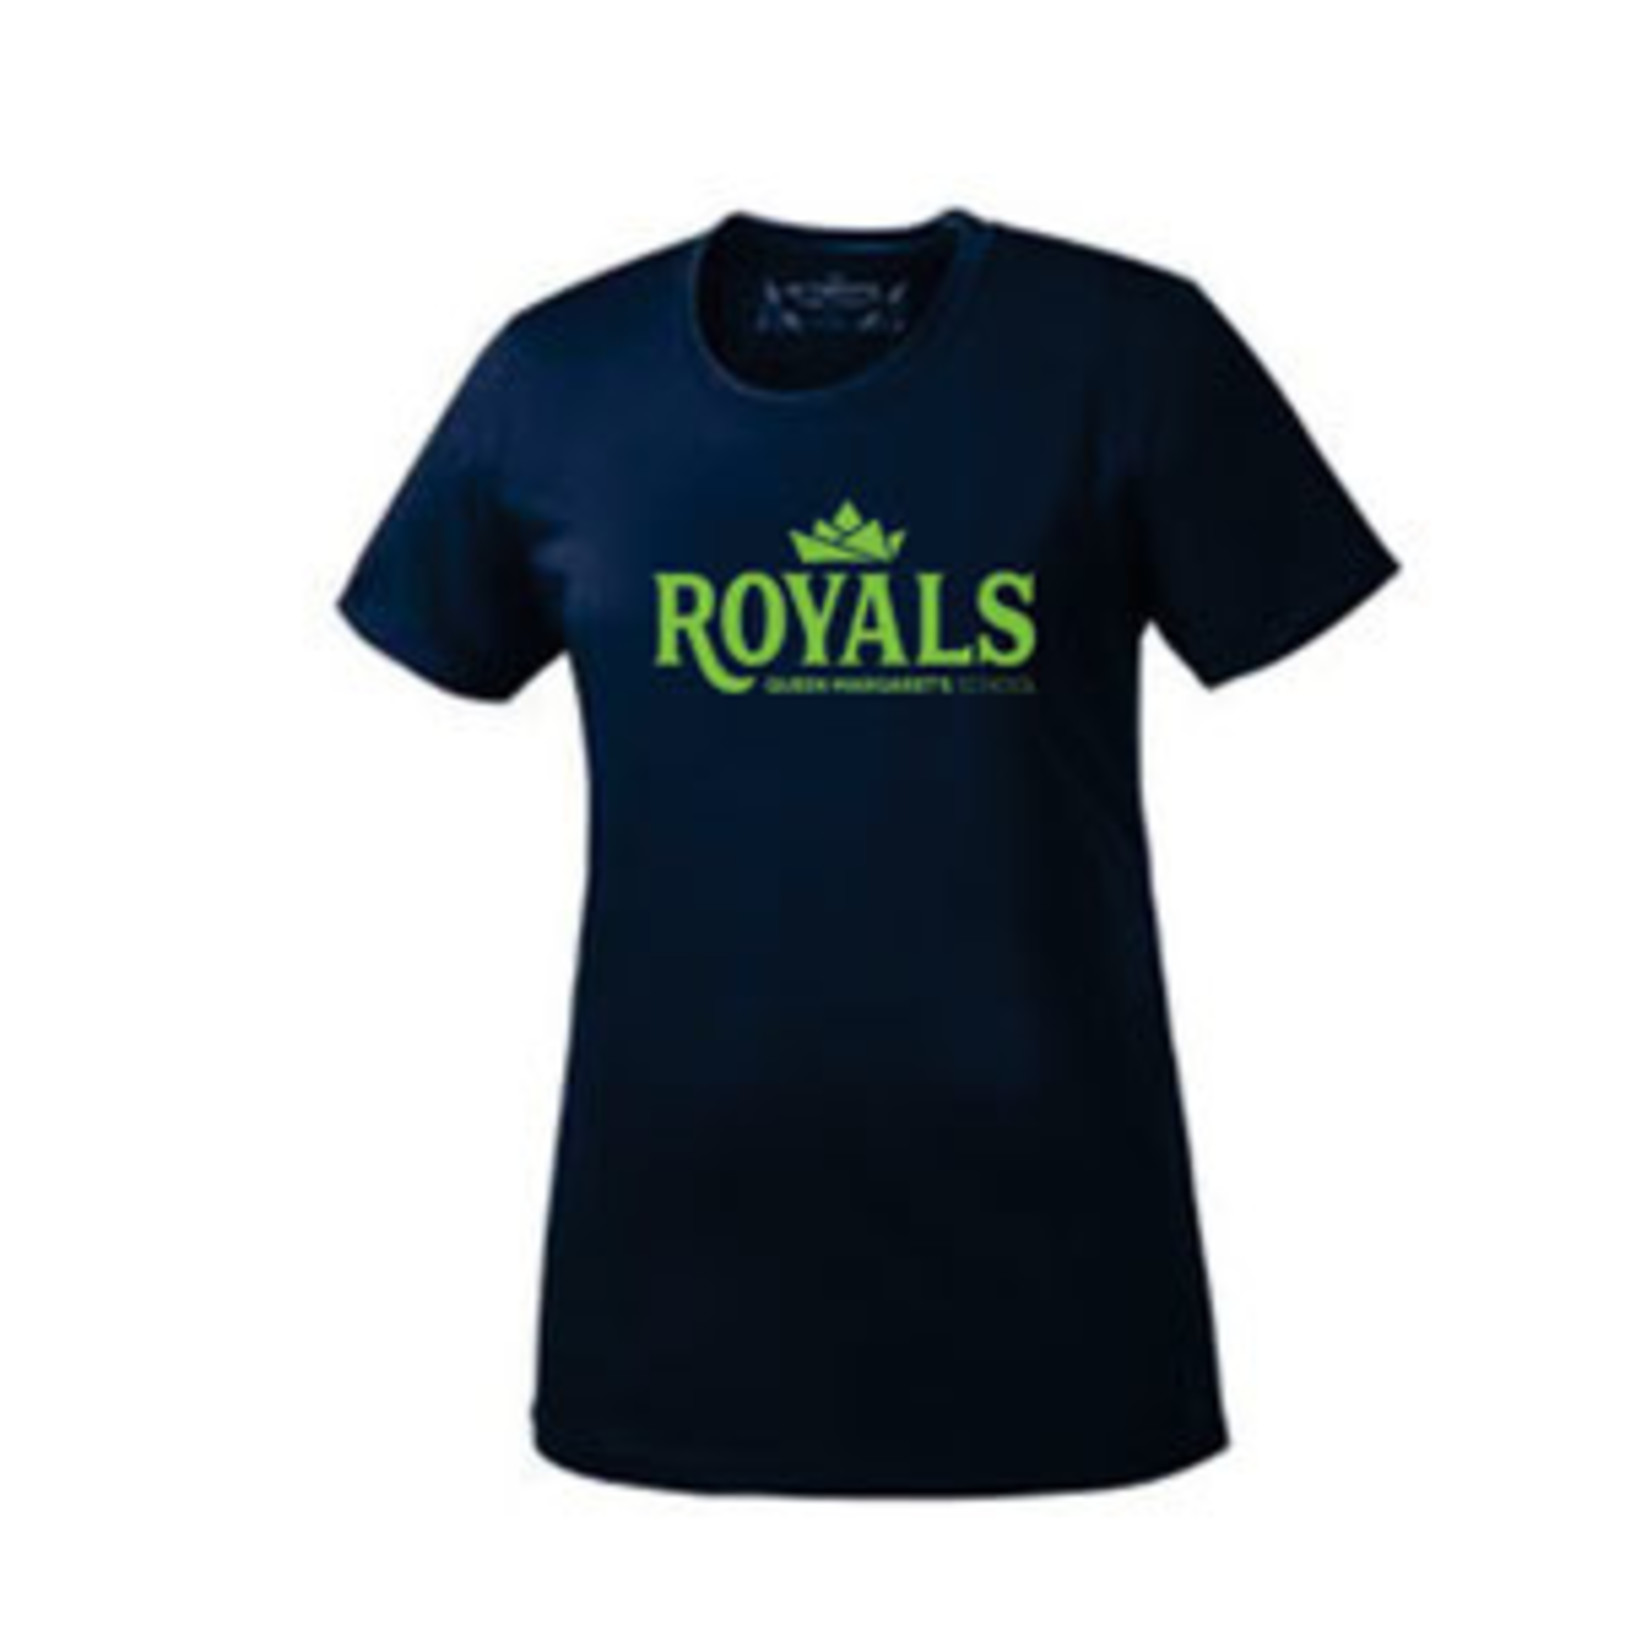 Authentic Tshirt Co. QMS Royals PE T-Shirt 8-12